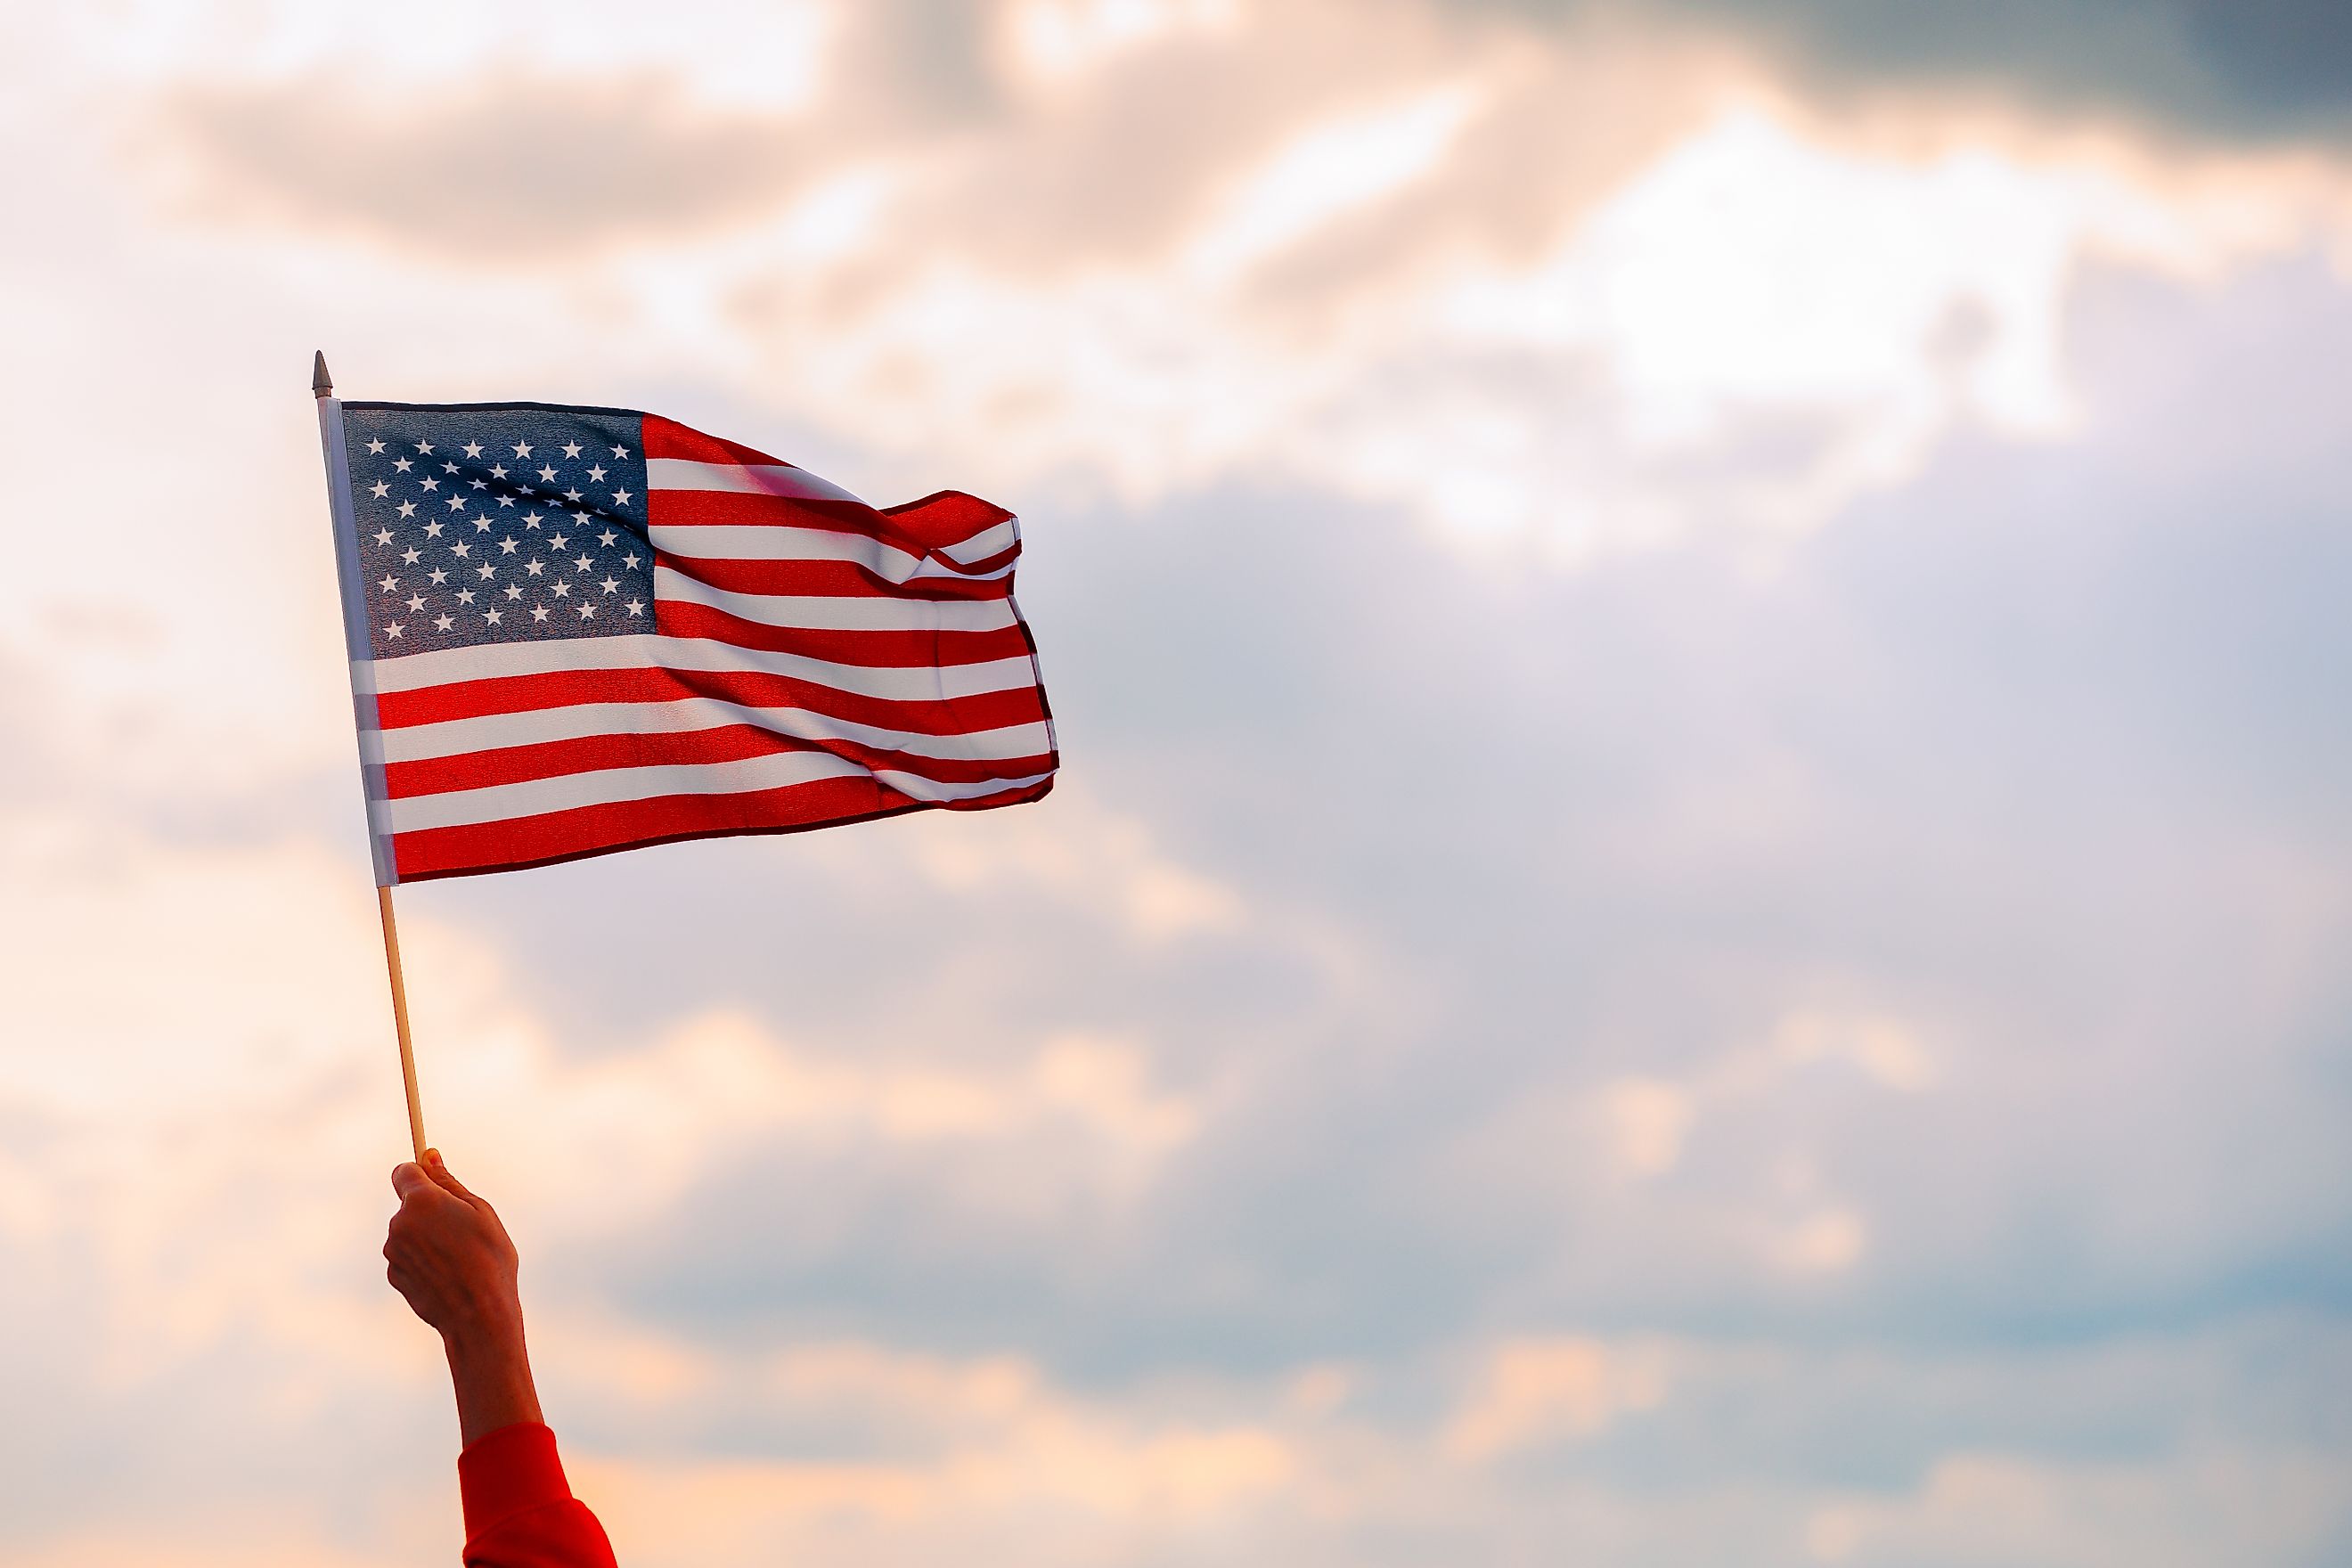 Hand Waving the Flag of the United States of America. Image credits: Nicoleta lonescu via Shutterstock